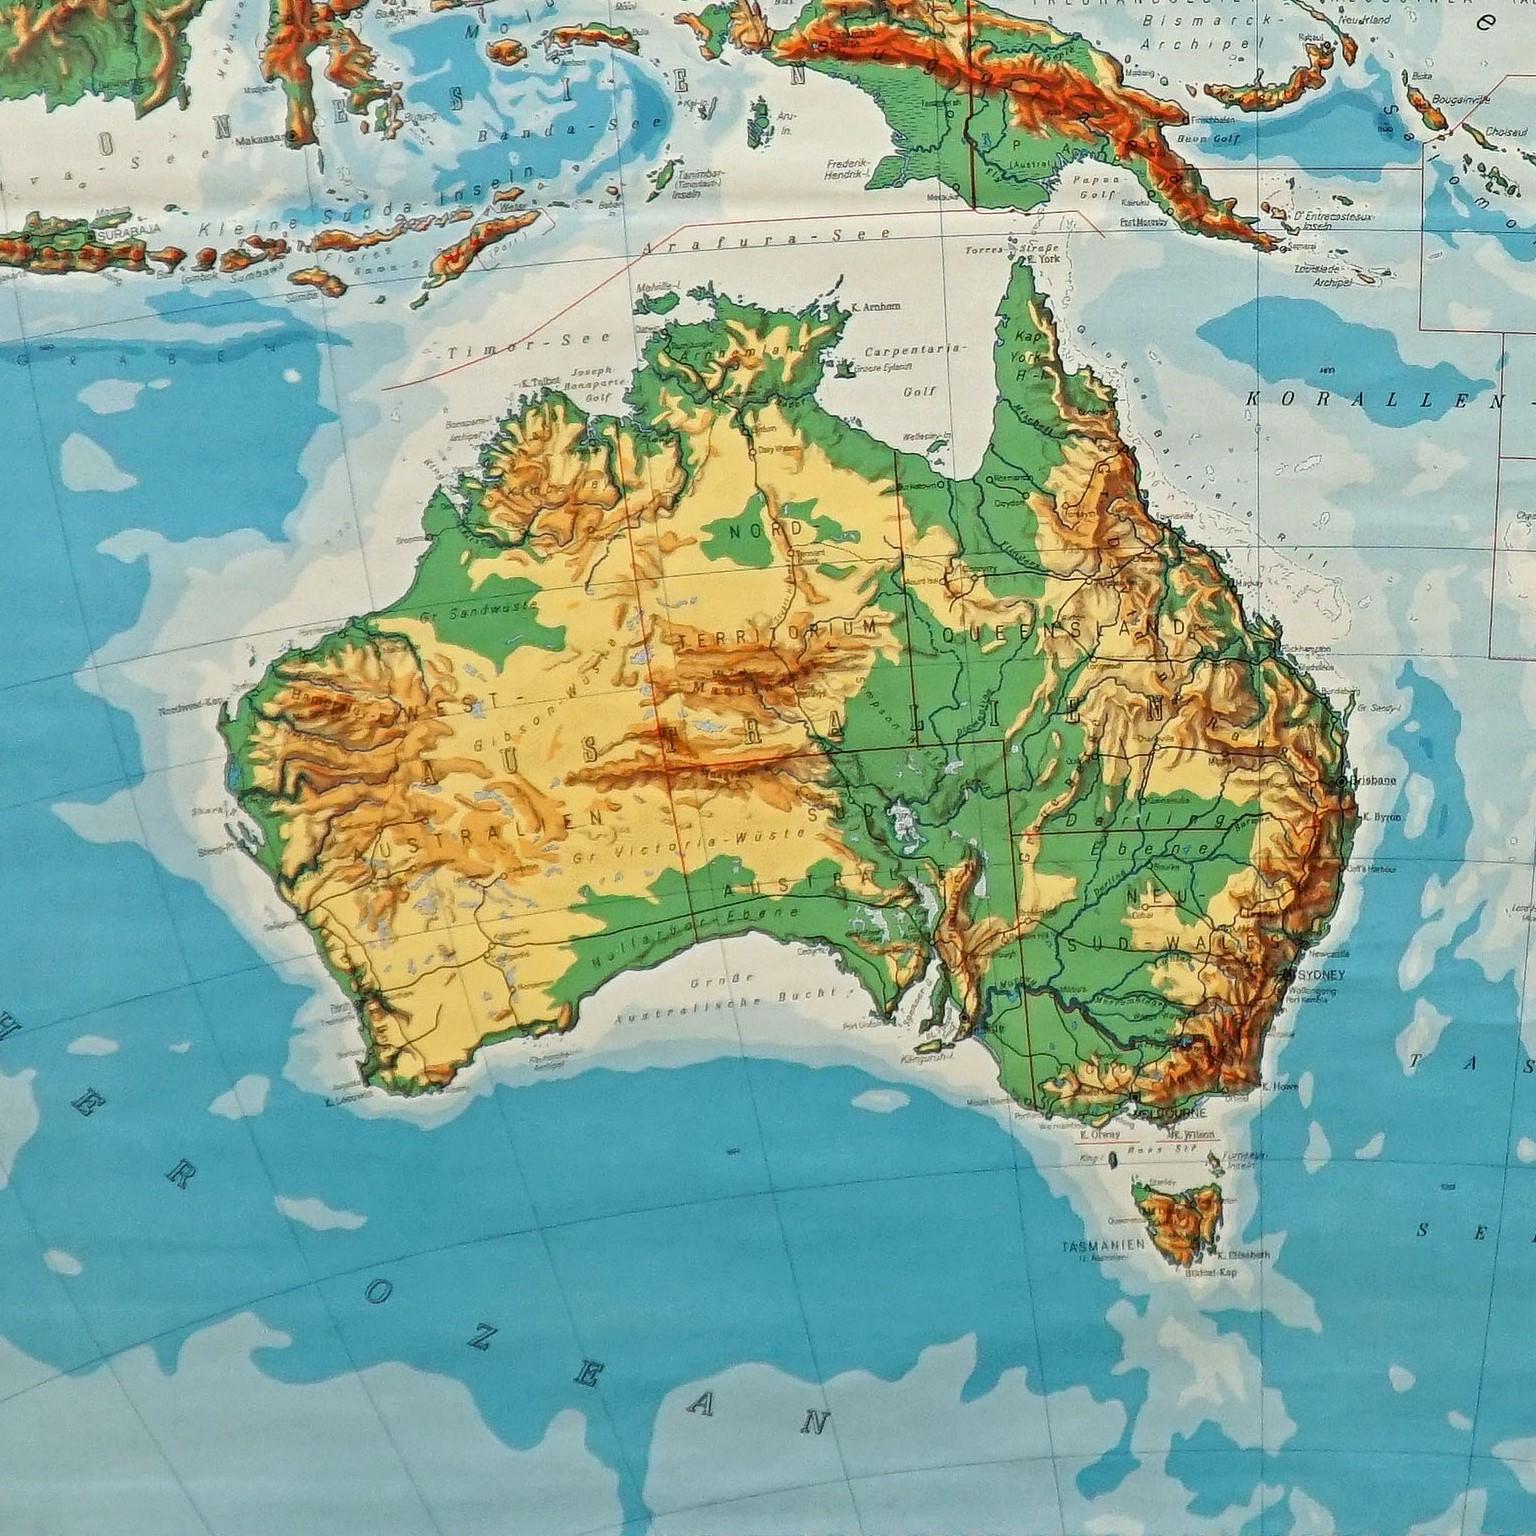 aesthetic map of australia